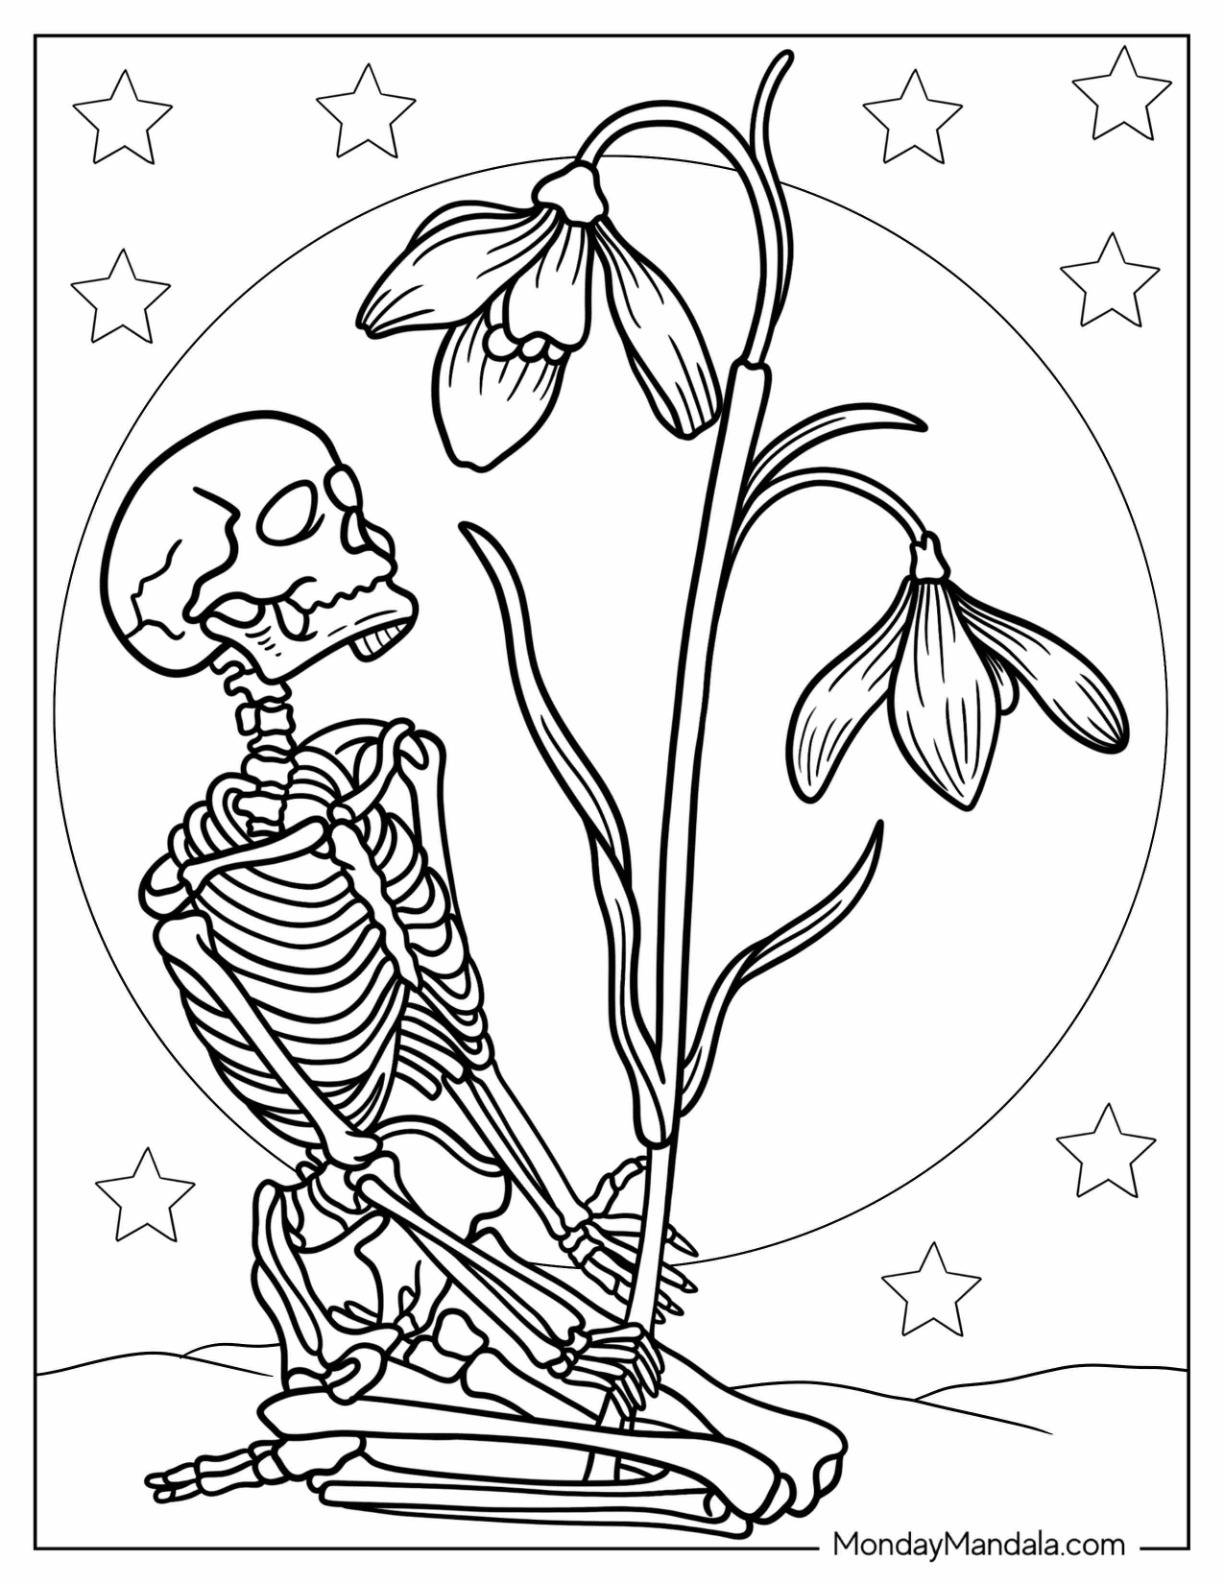 Skeleton coloring pages free pdf printables